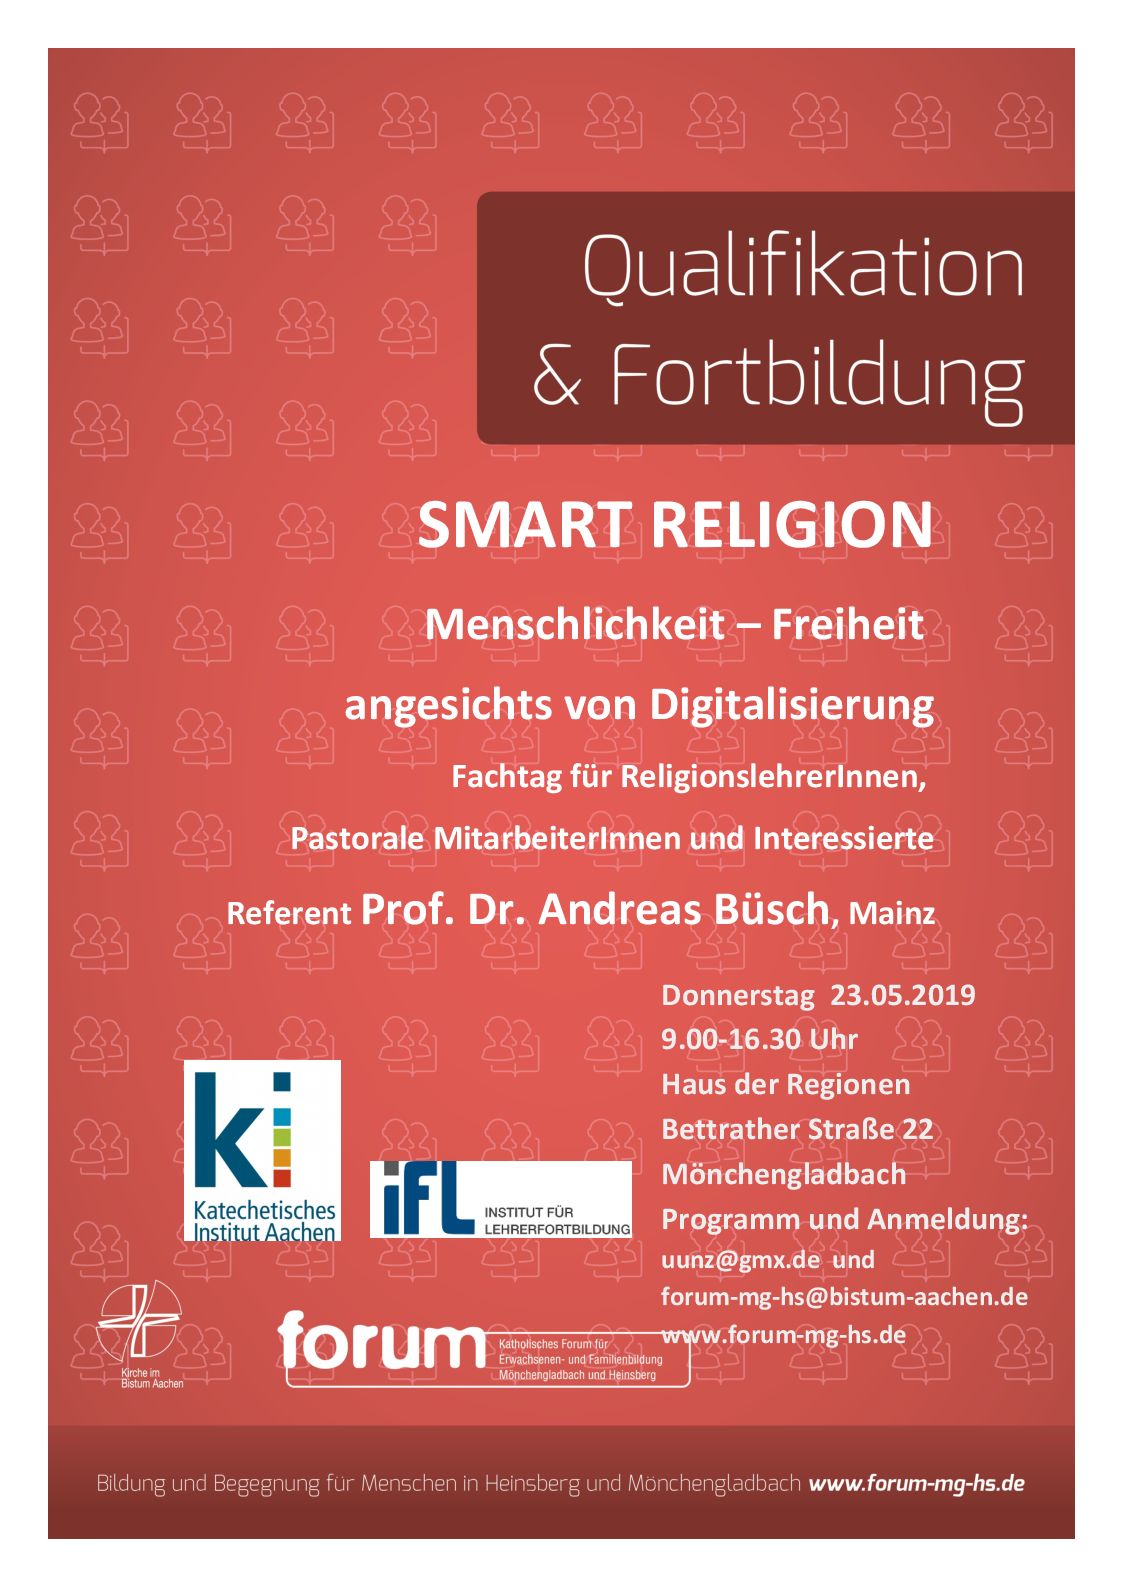 Smart Religion (c) Kath. Forum